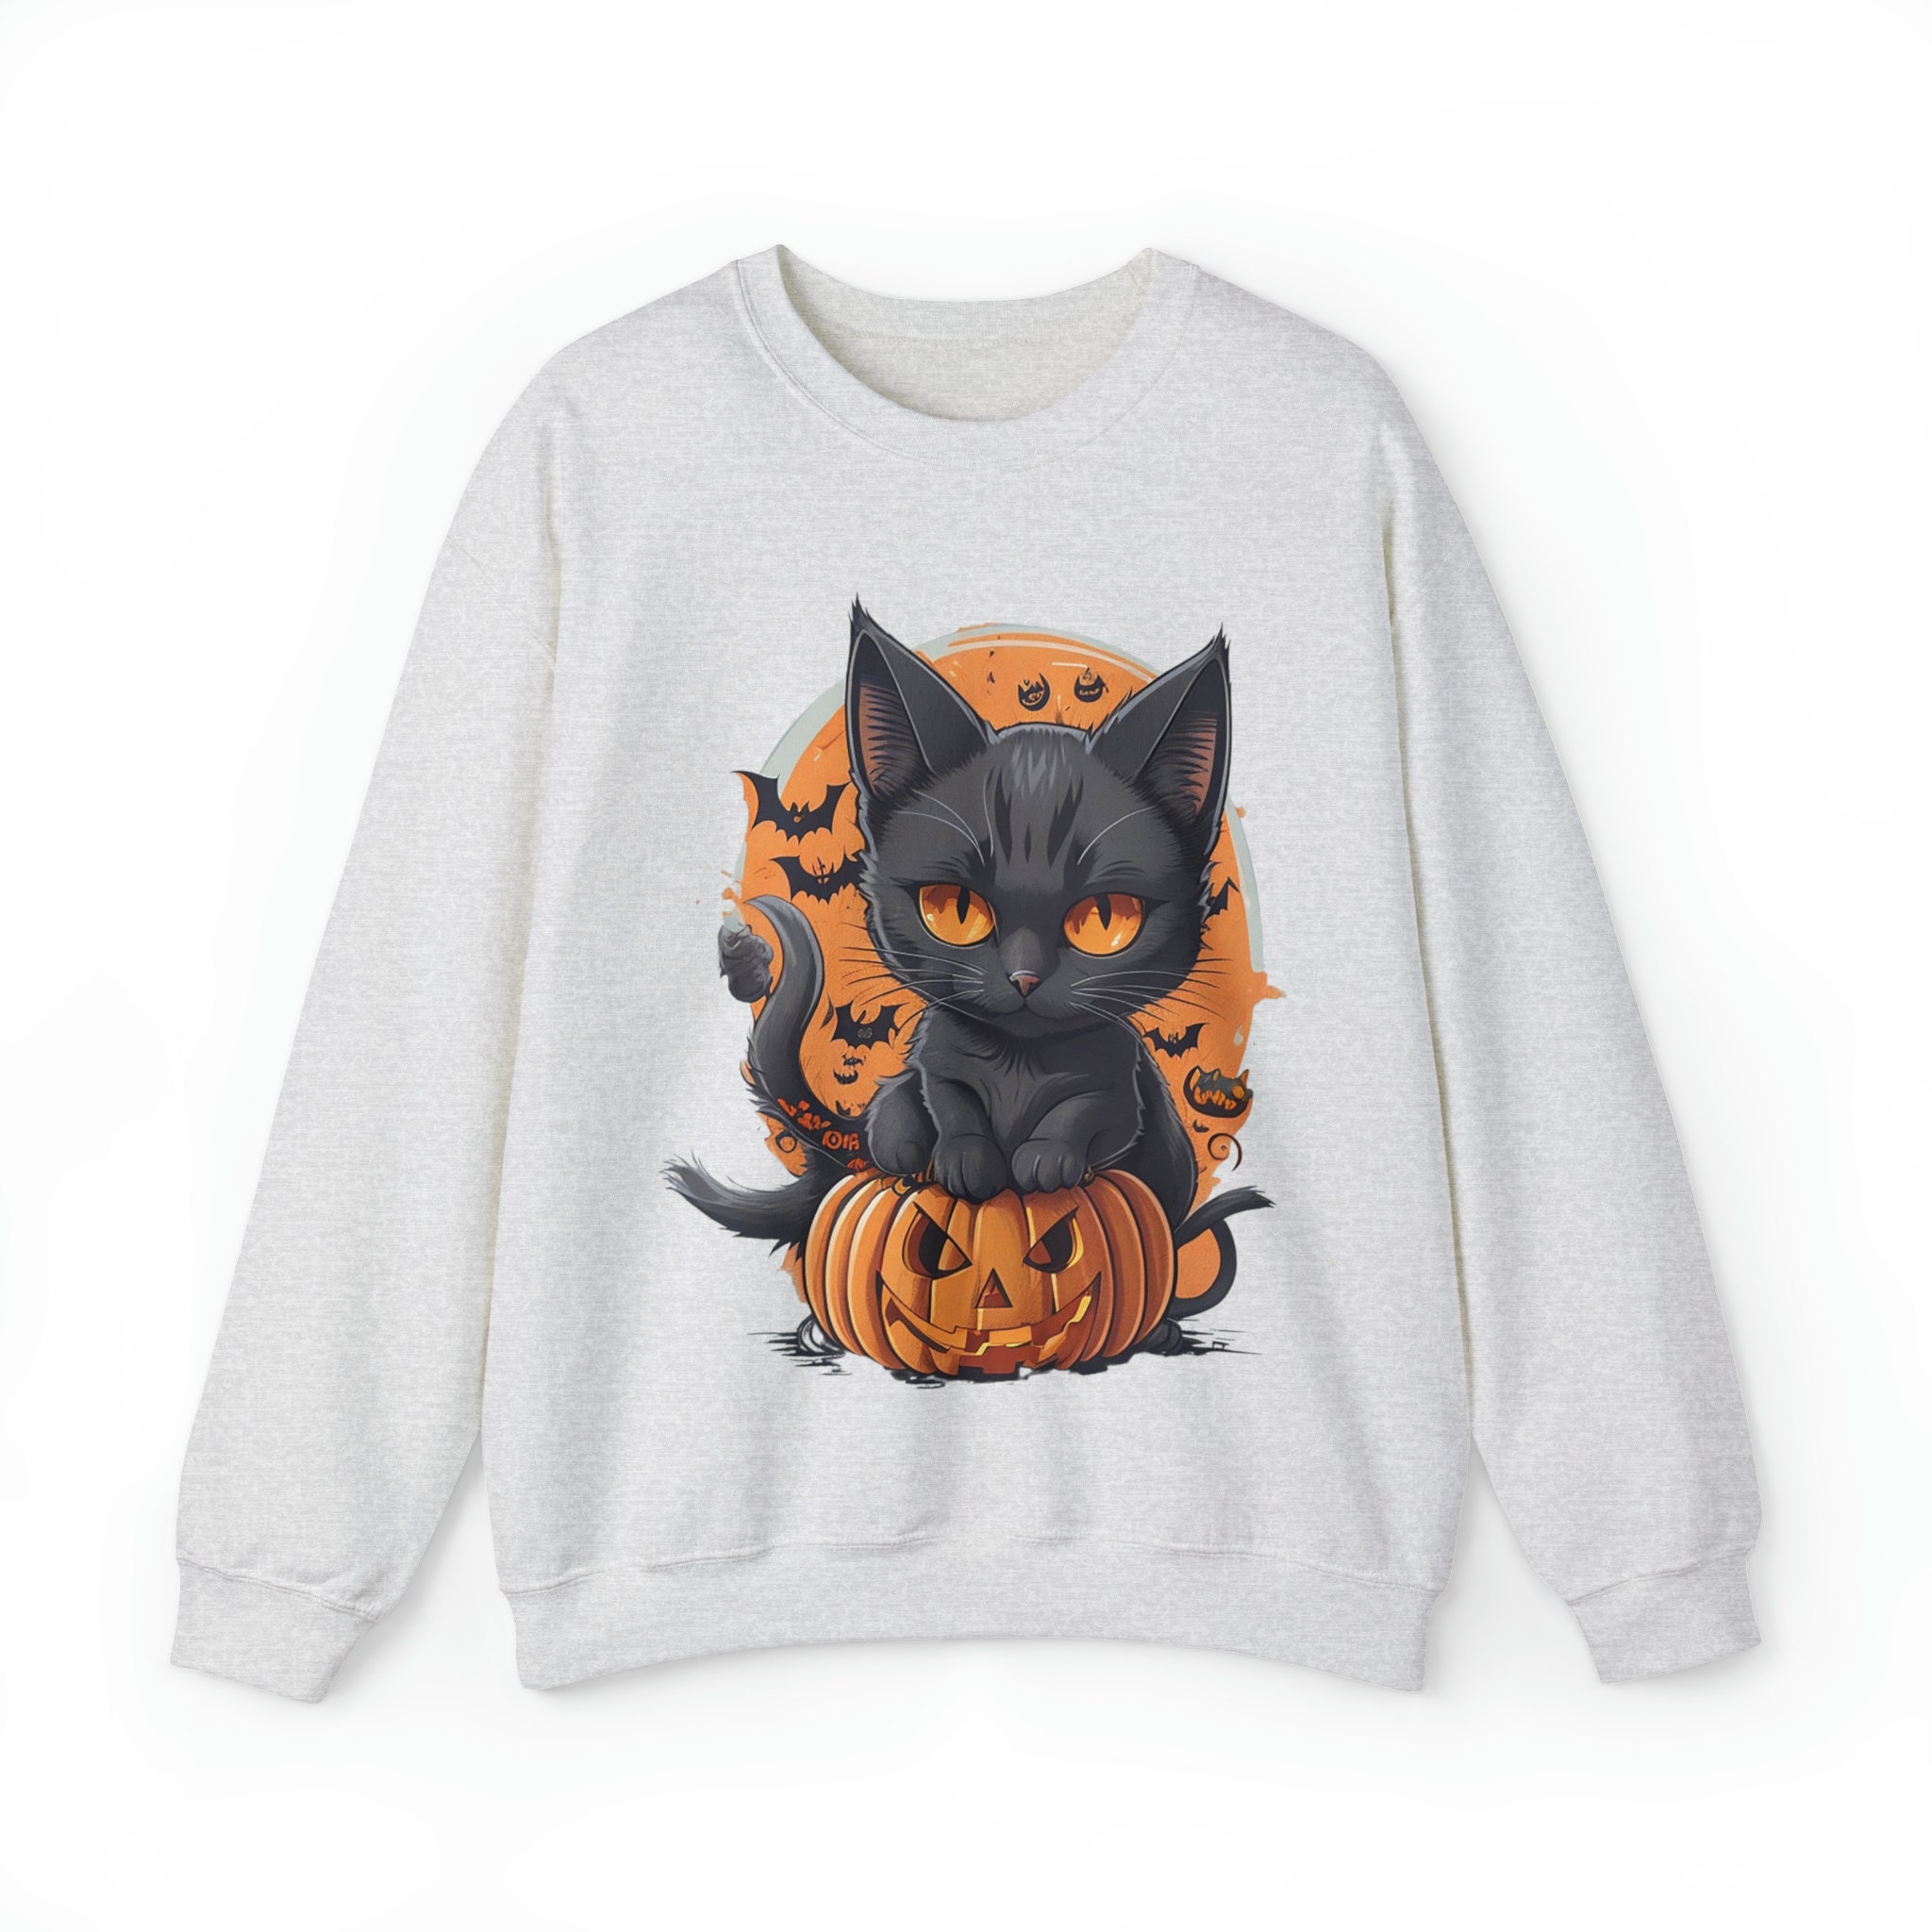 Discover Black Cat on Pumpkin Halloween Jumper Black Cat Sweatshirt Autumn Shirt Jumper Pumpkin Witch Jumper Autumn Sweatshirt